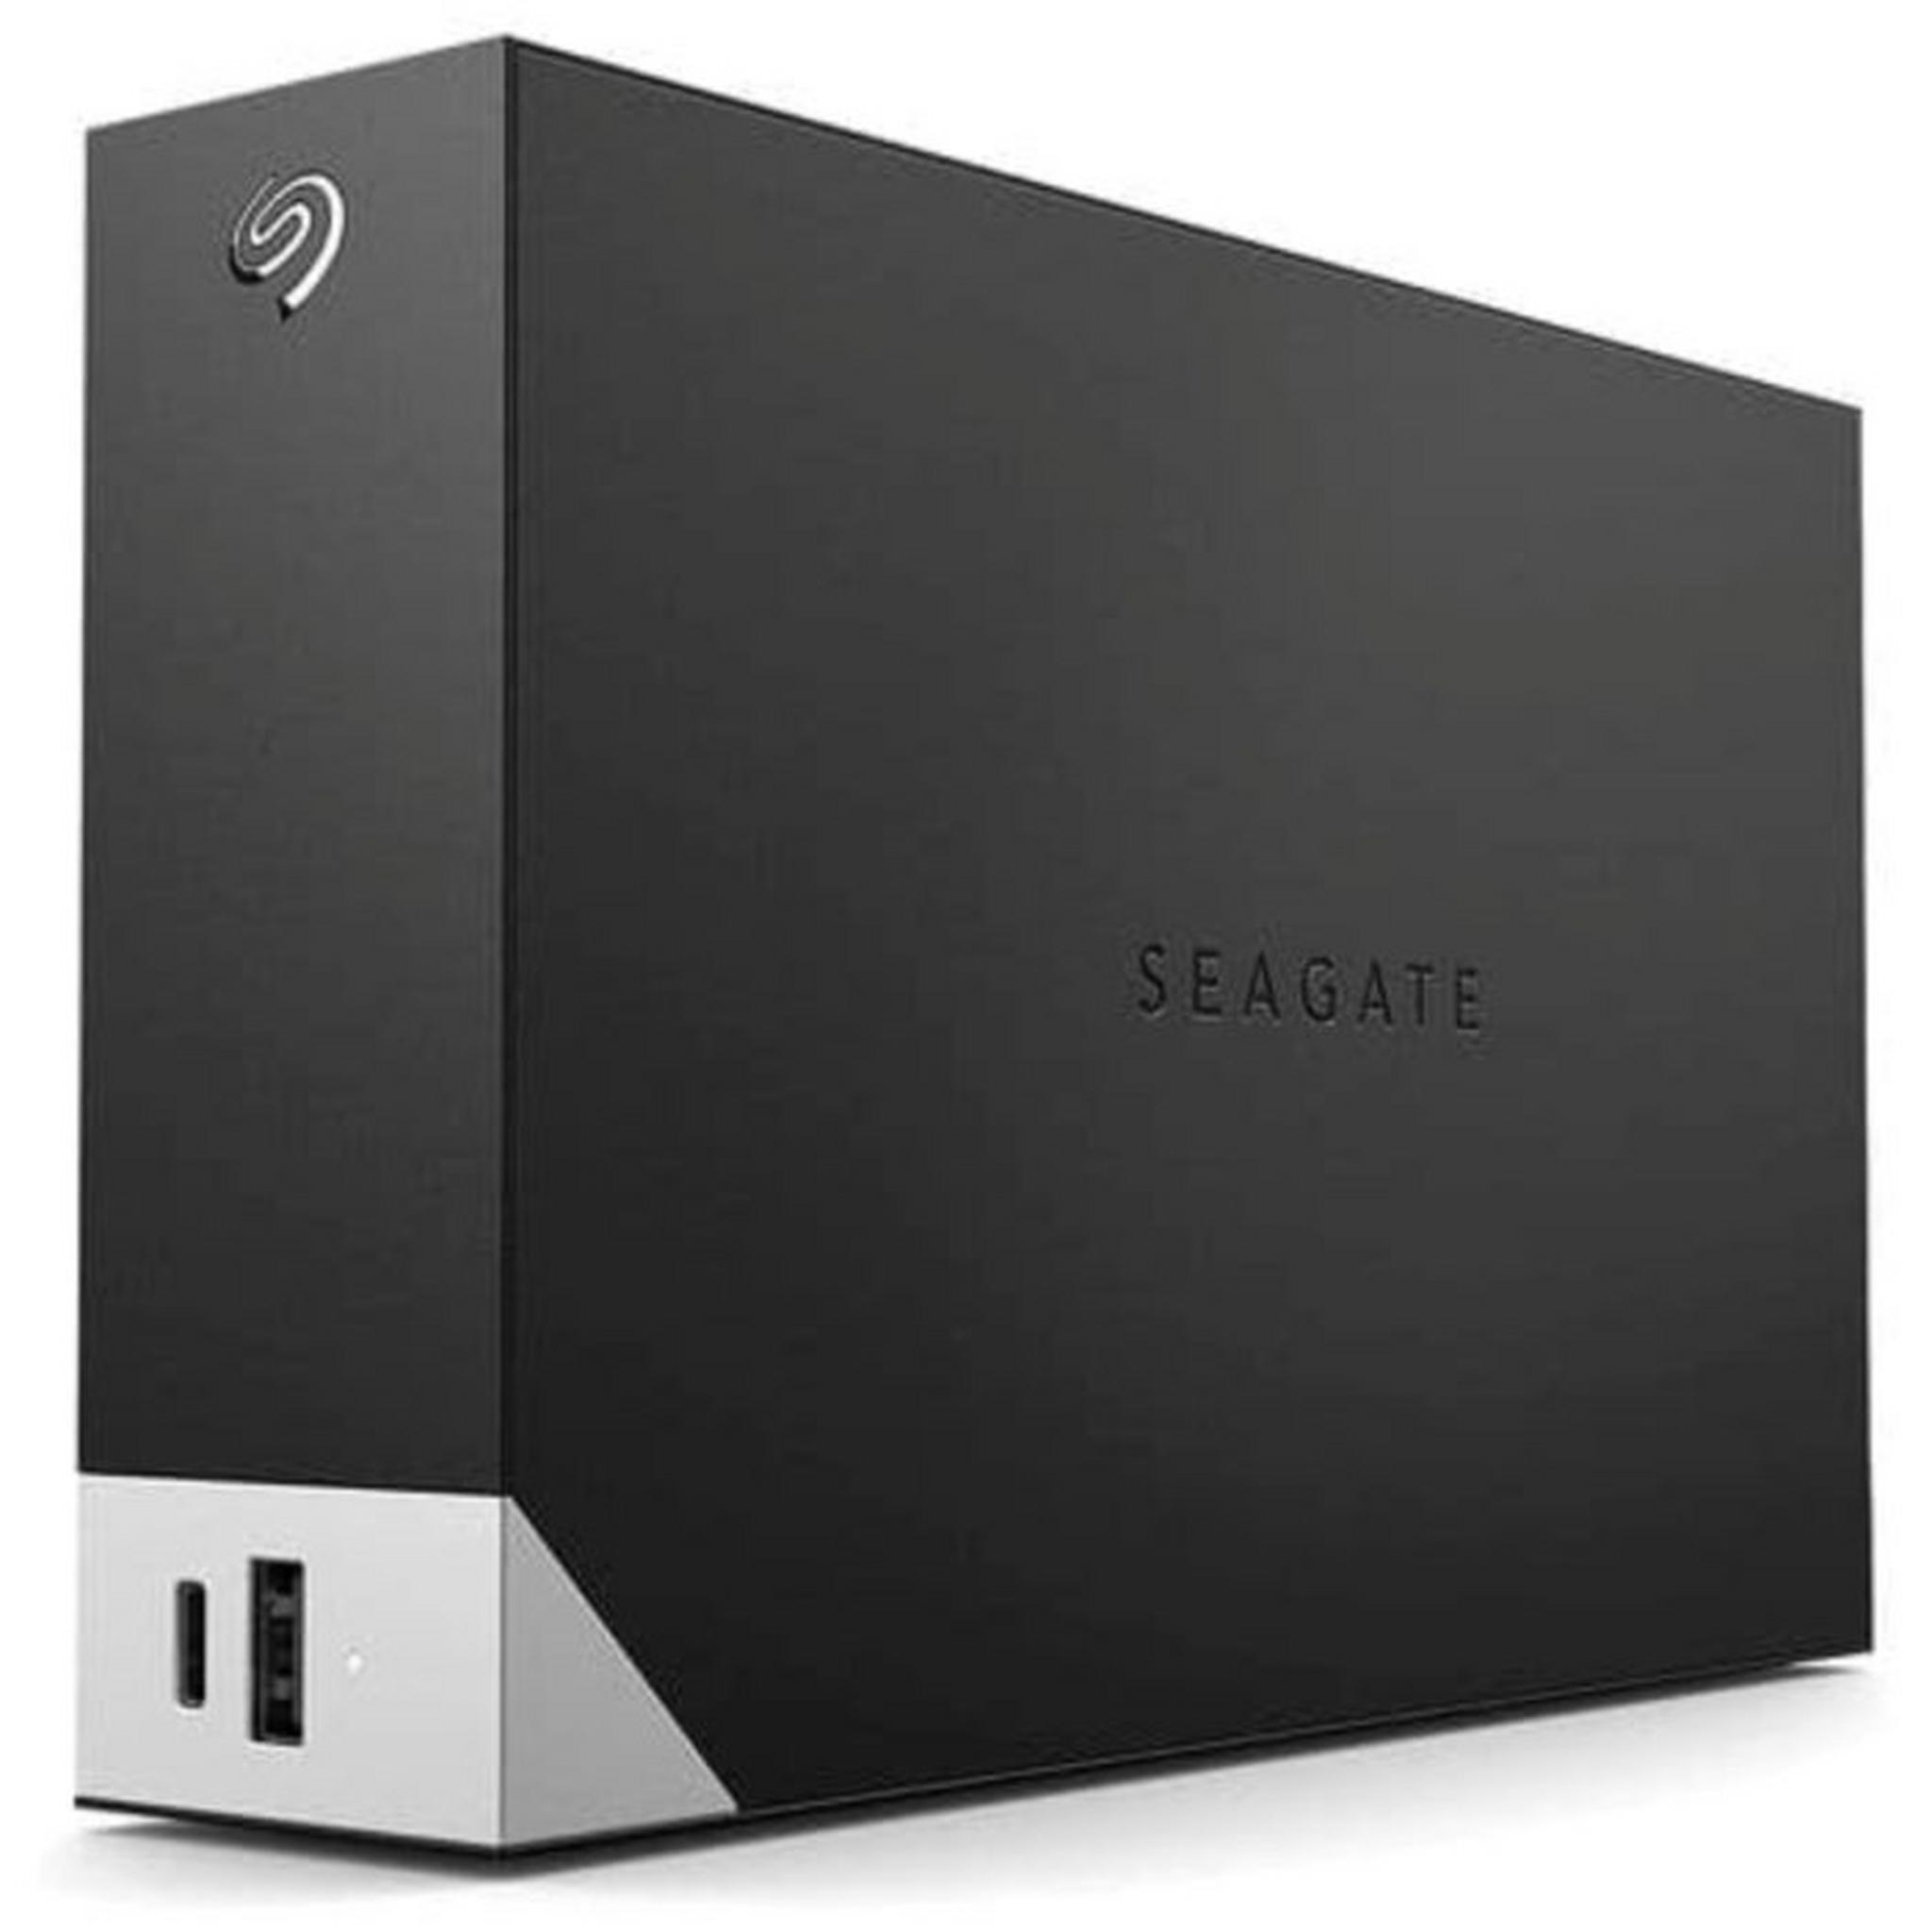 Seagate 14TB One Touch Hub External Hard Drive Desktop, STLC14000400 – Black